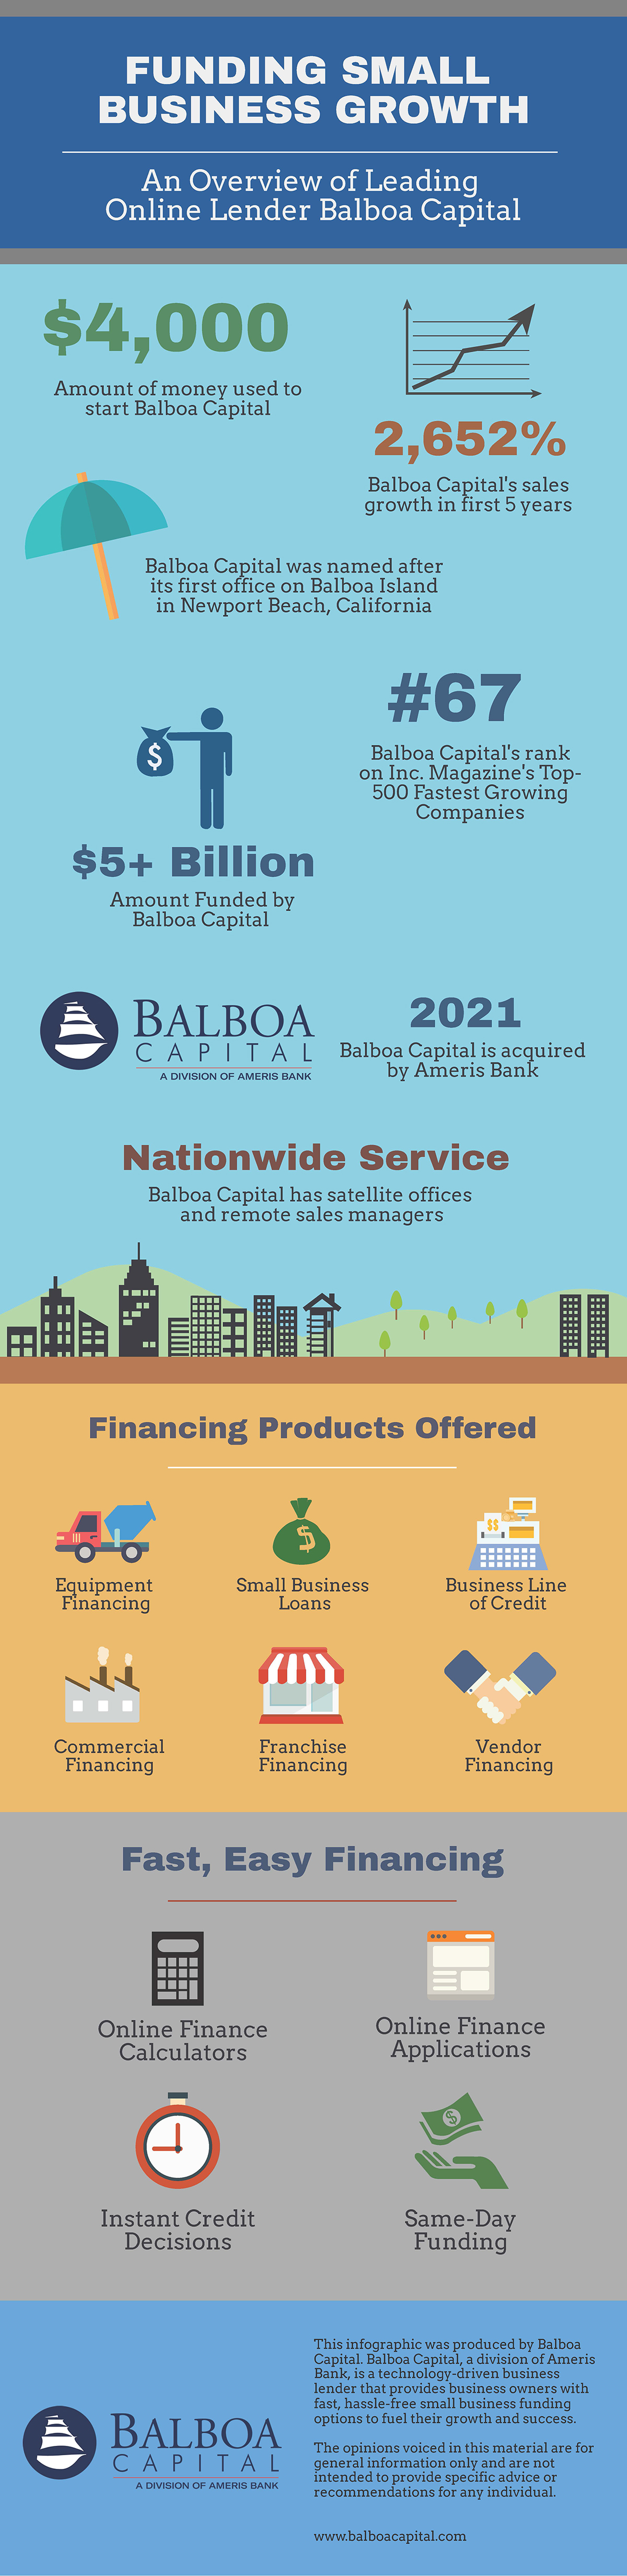 Balboa Capital Infographic